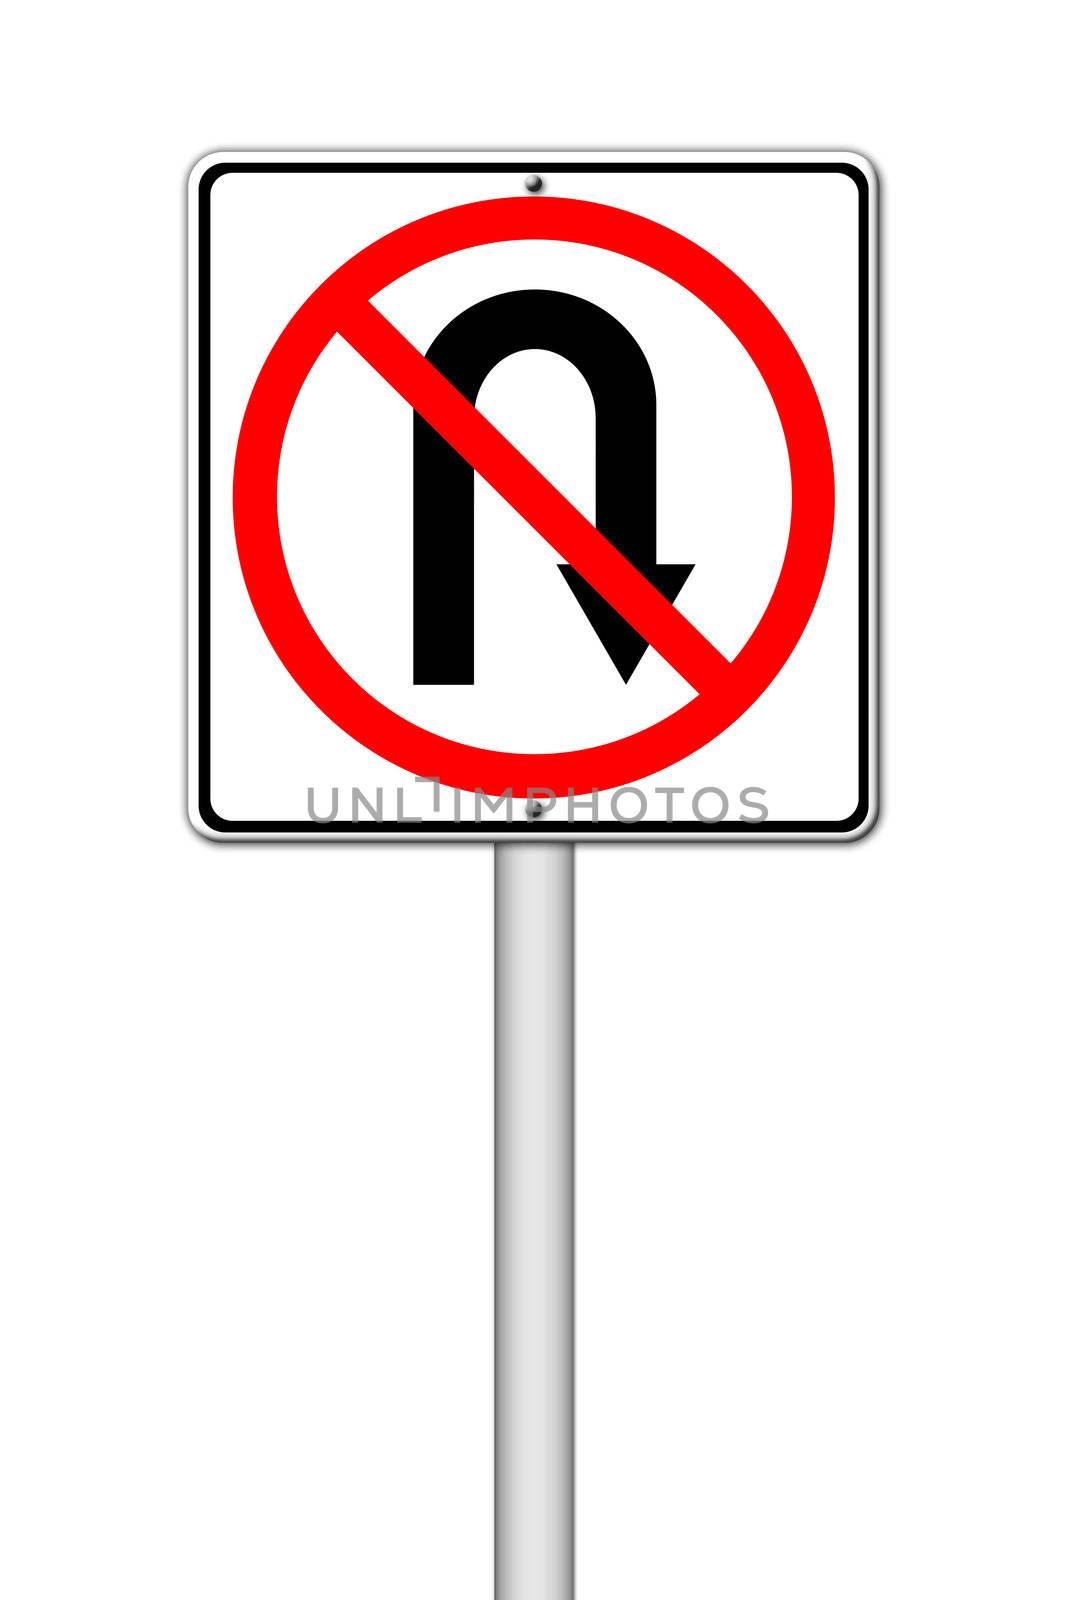 No return back road sign by geargodz